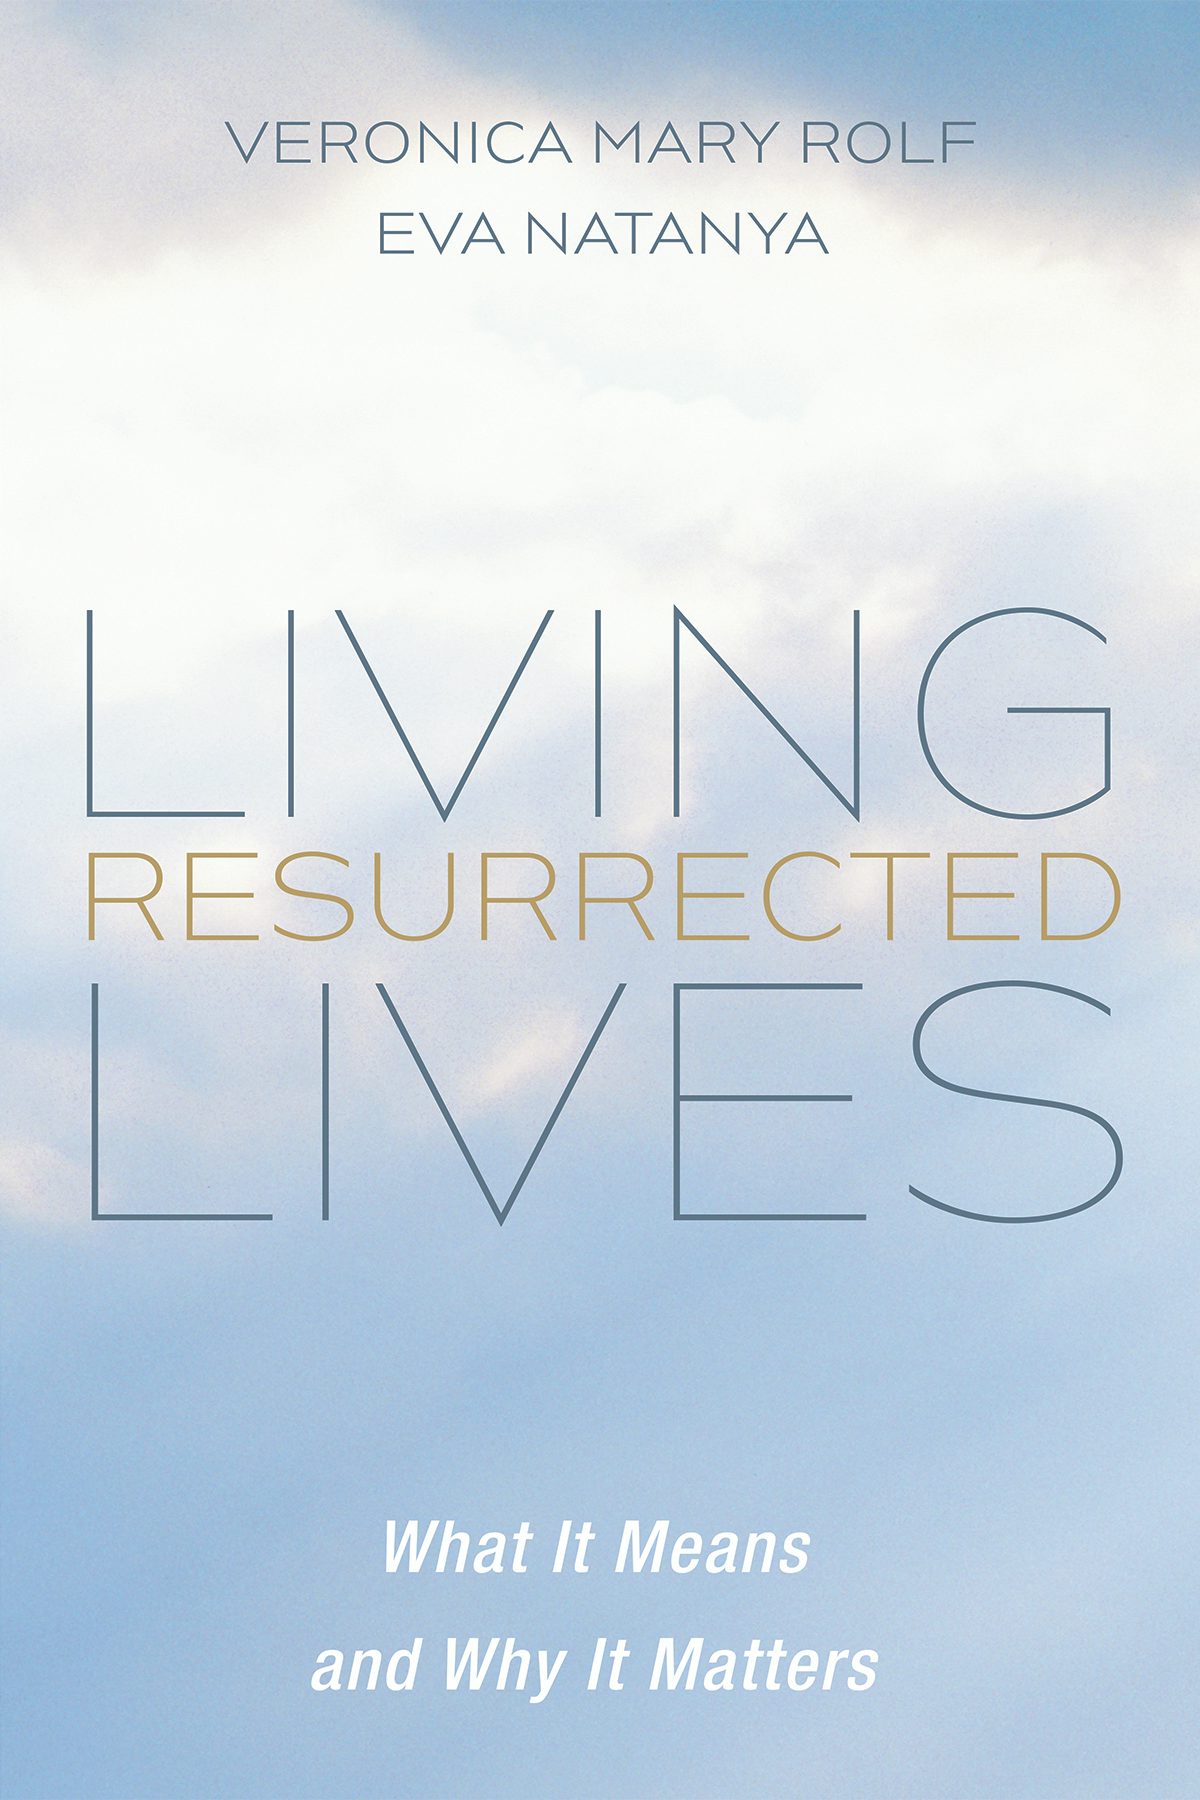 32 lives resurrected